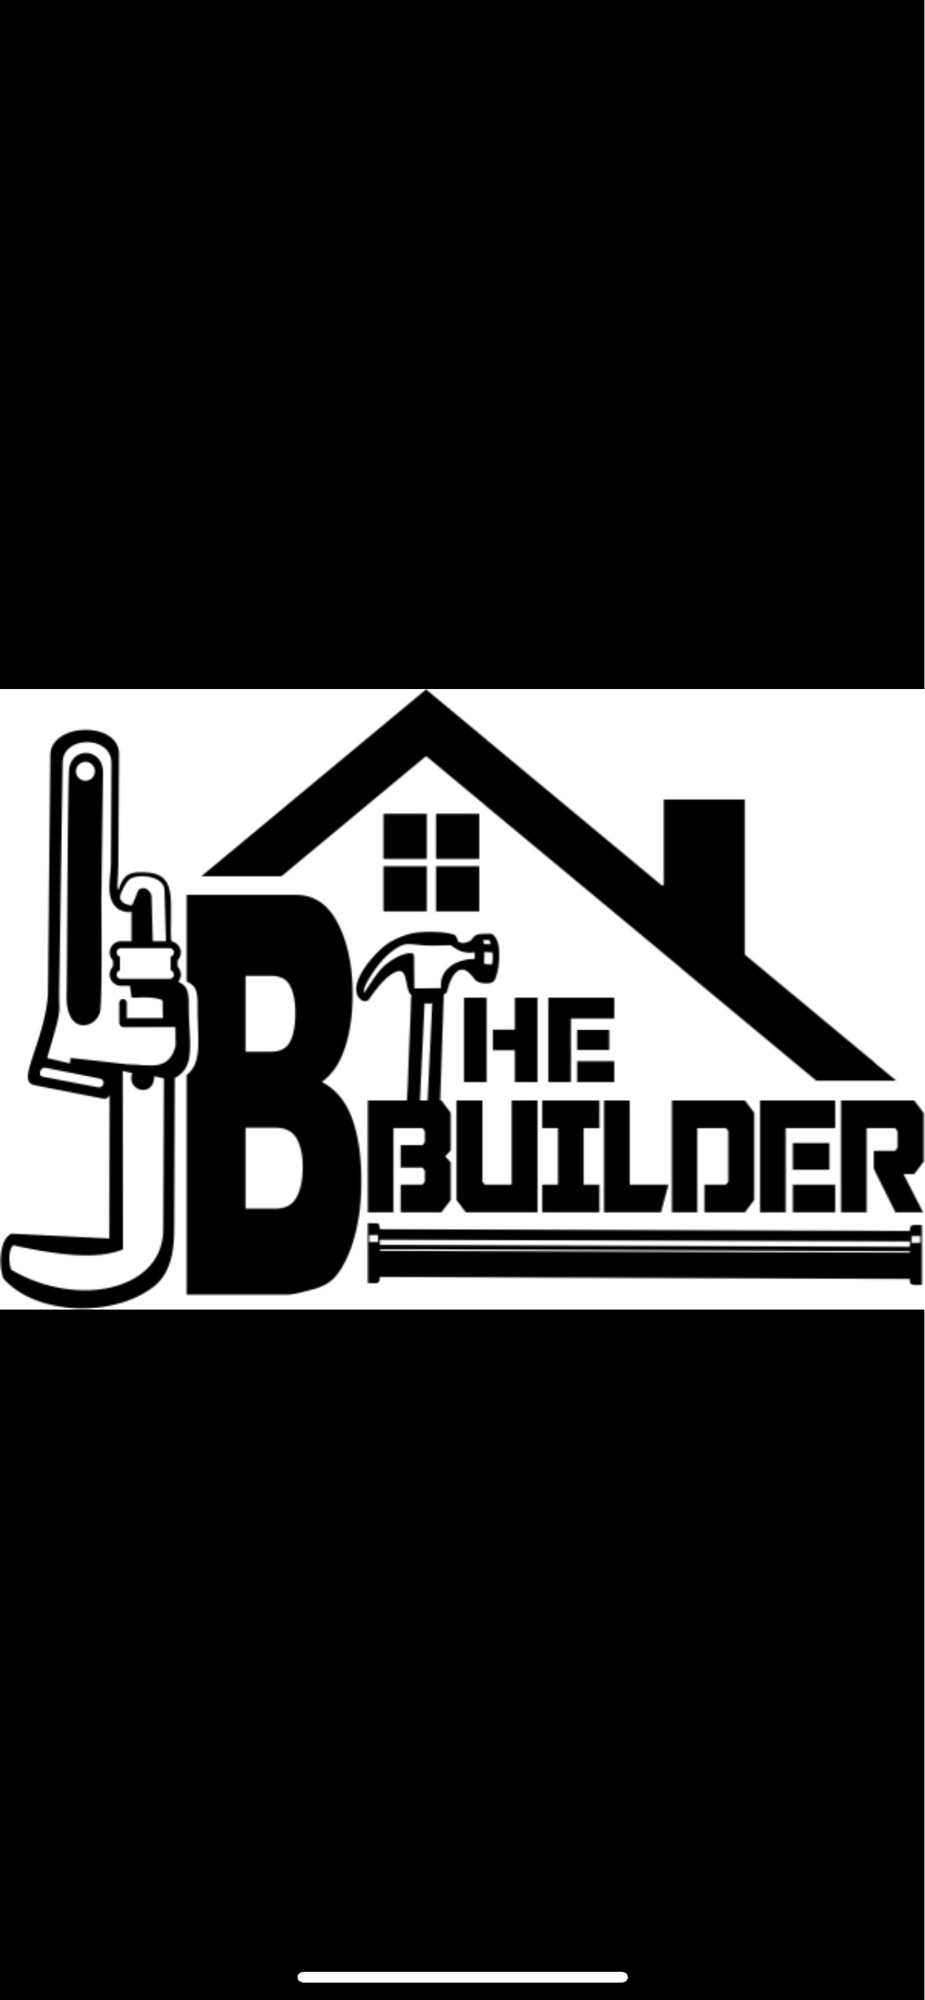 J.B. The Builder Logo